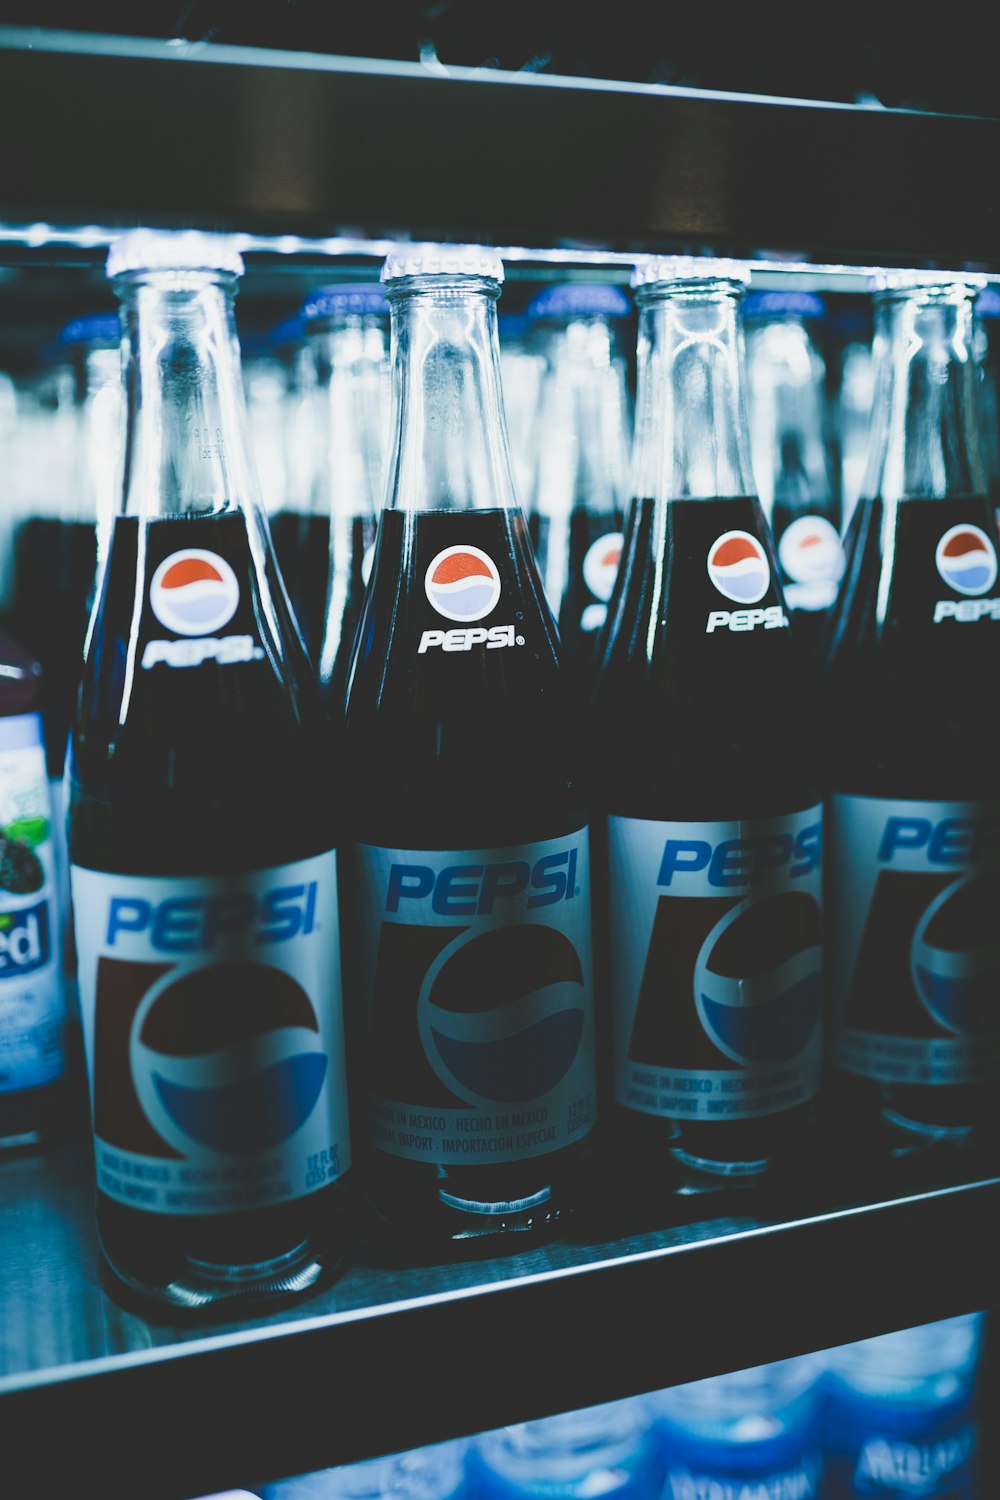 Pepsi bottles on cooler